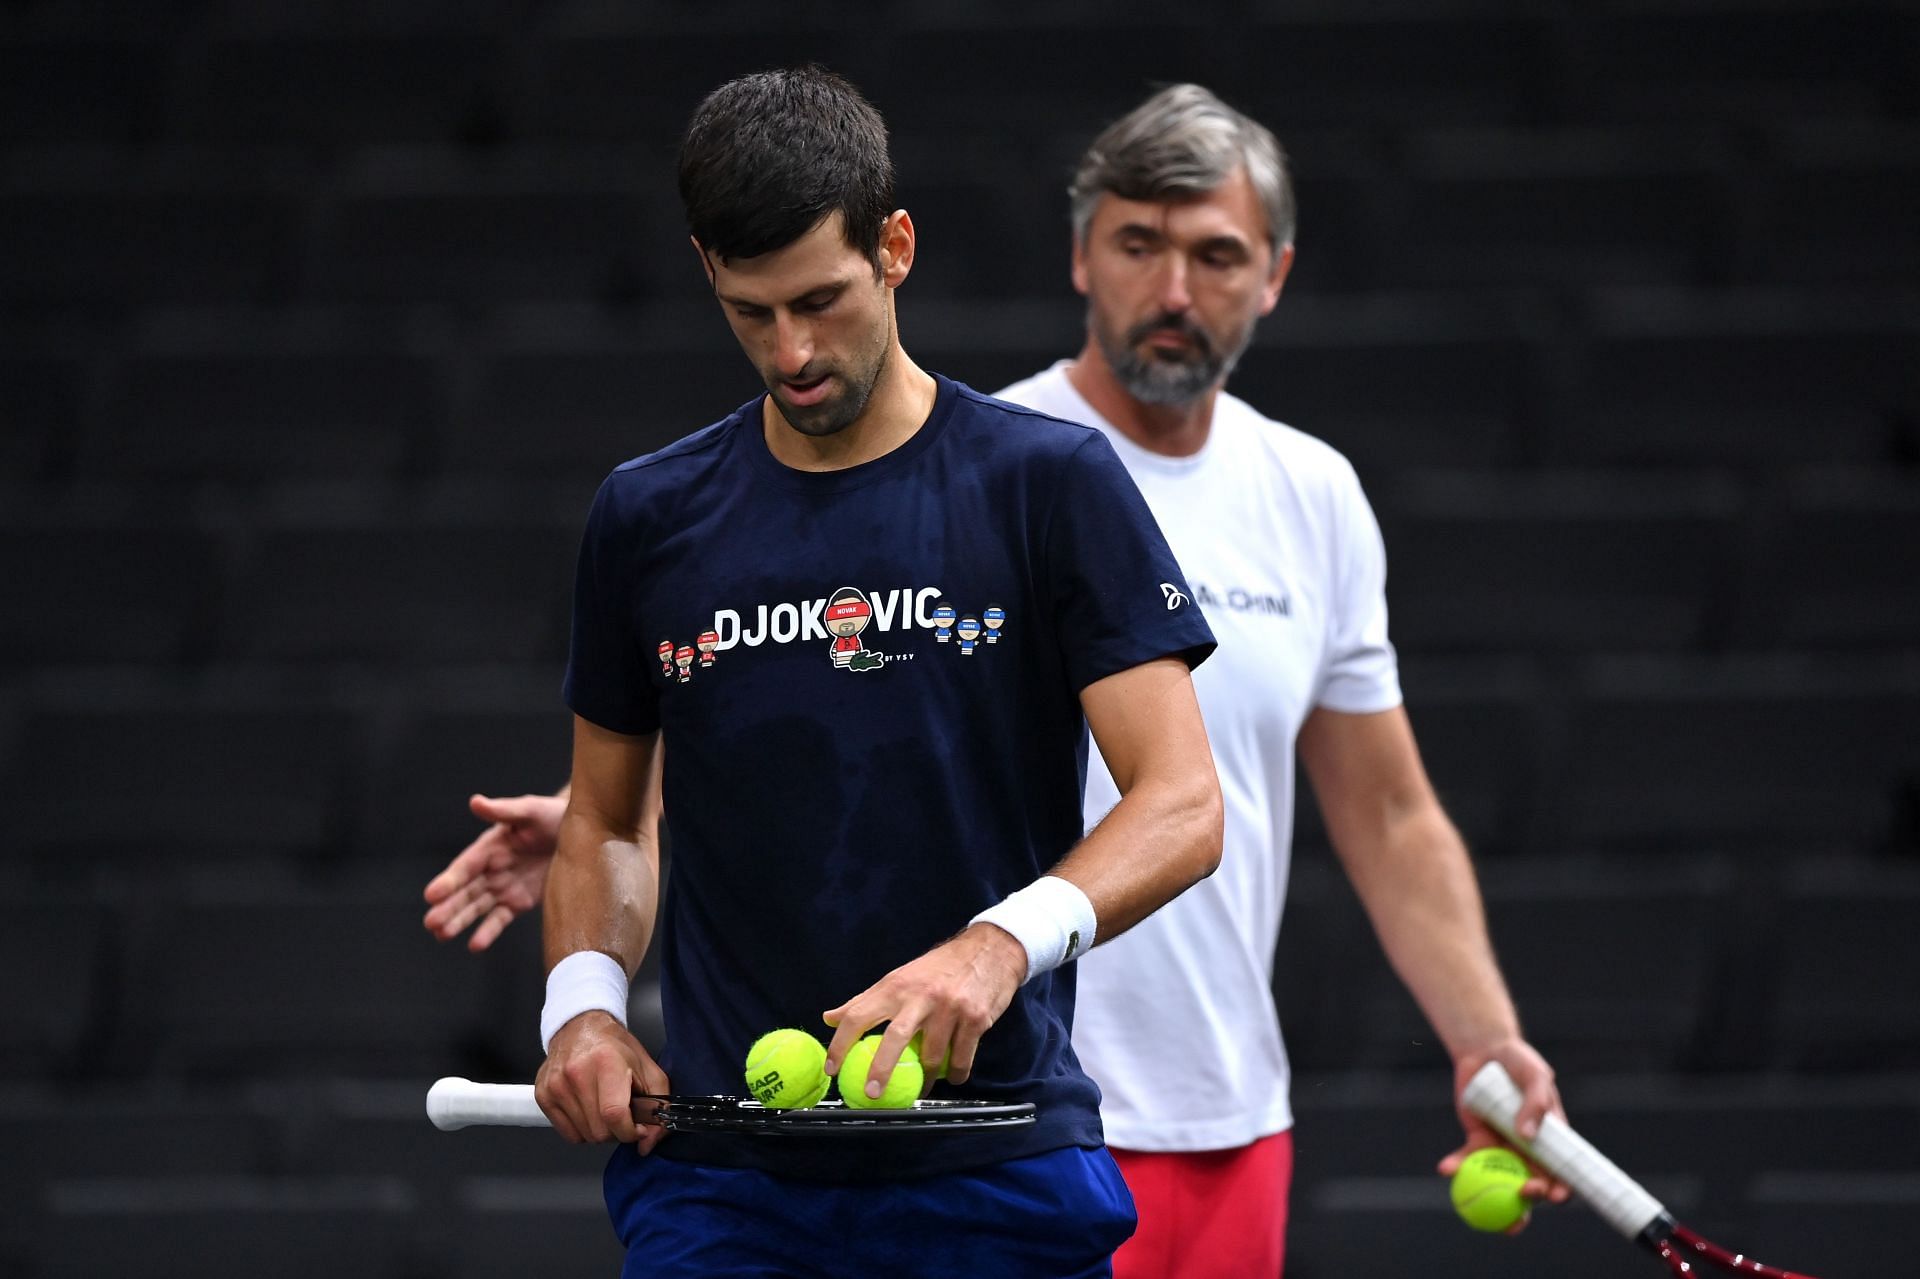 Djokovic with his coach Goran Ivanisevic of Croatia